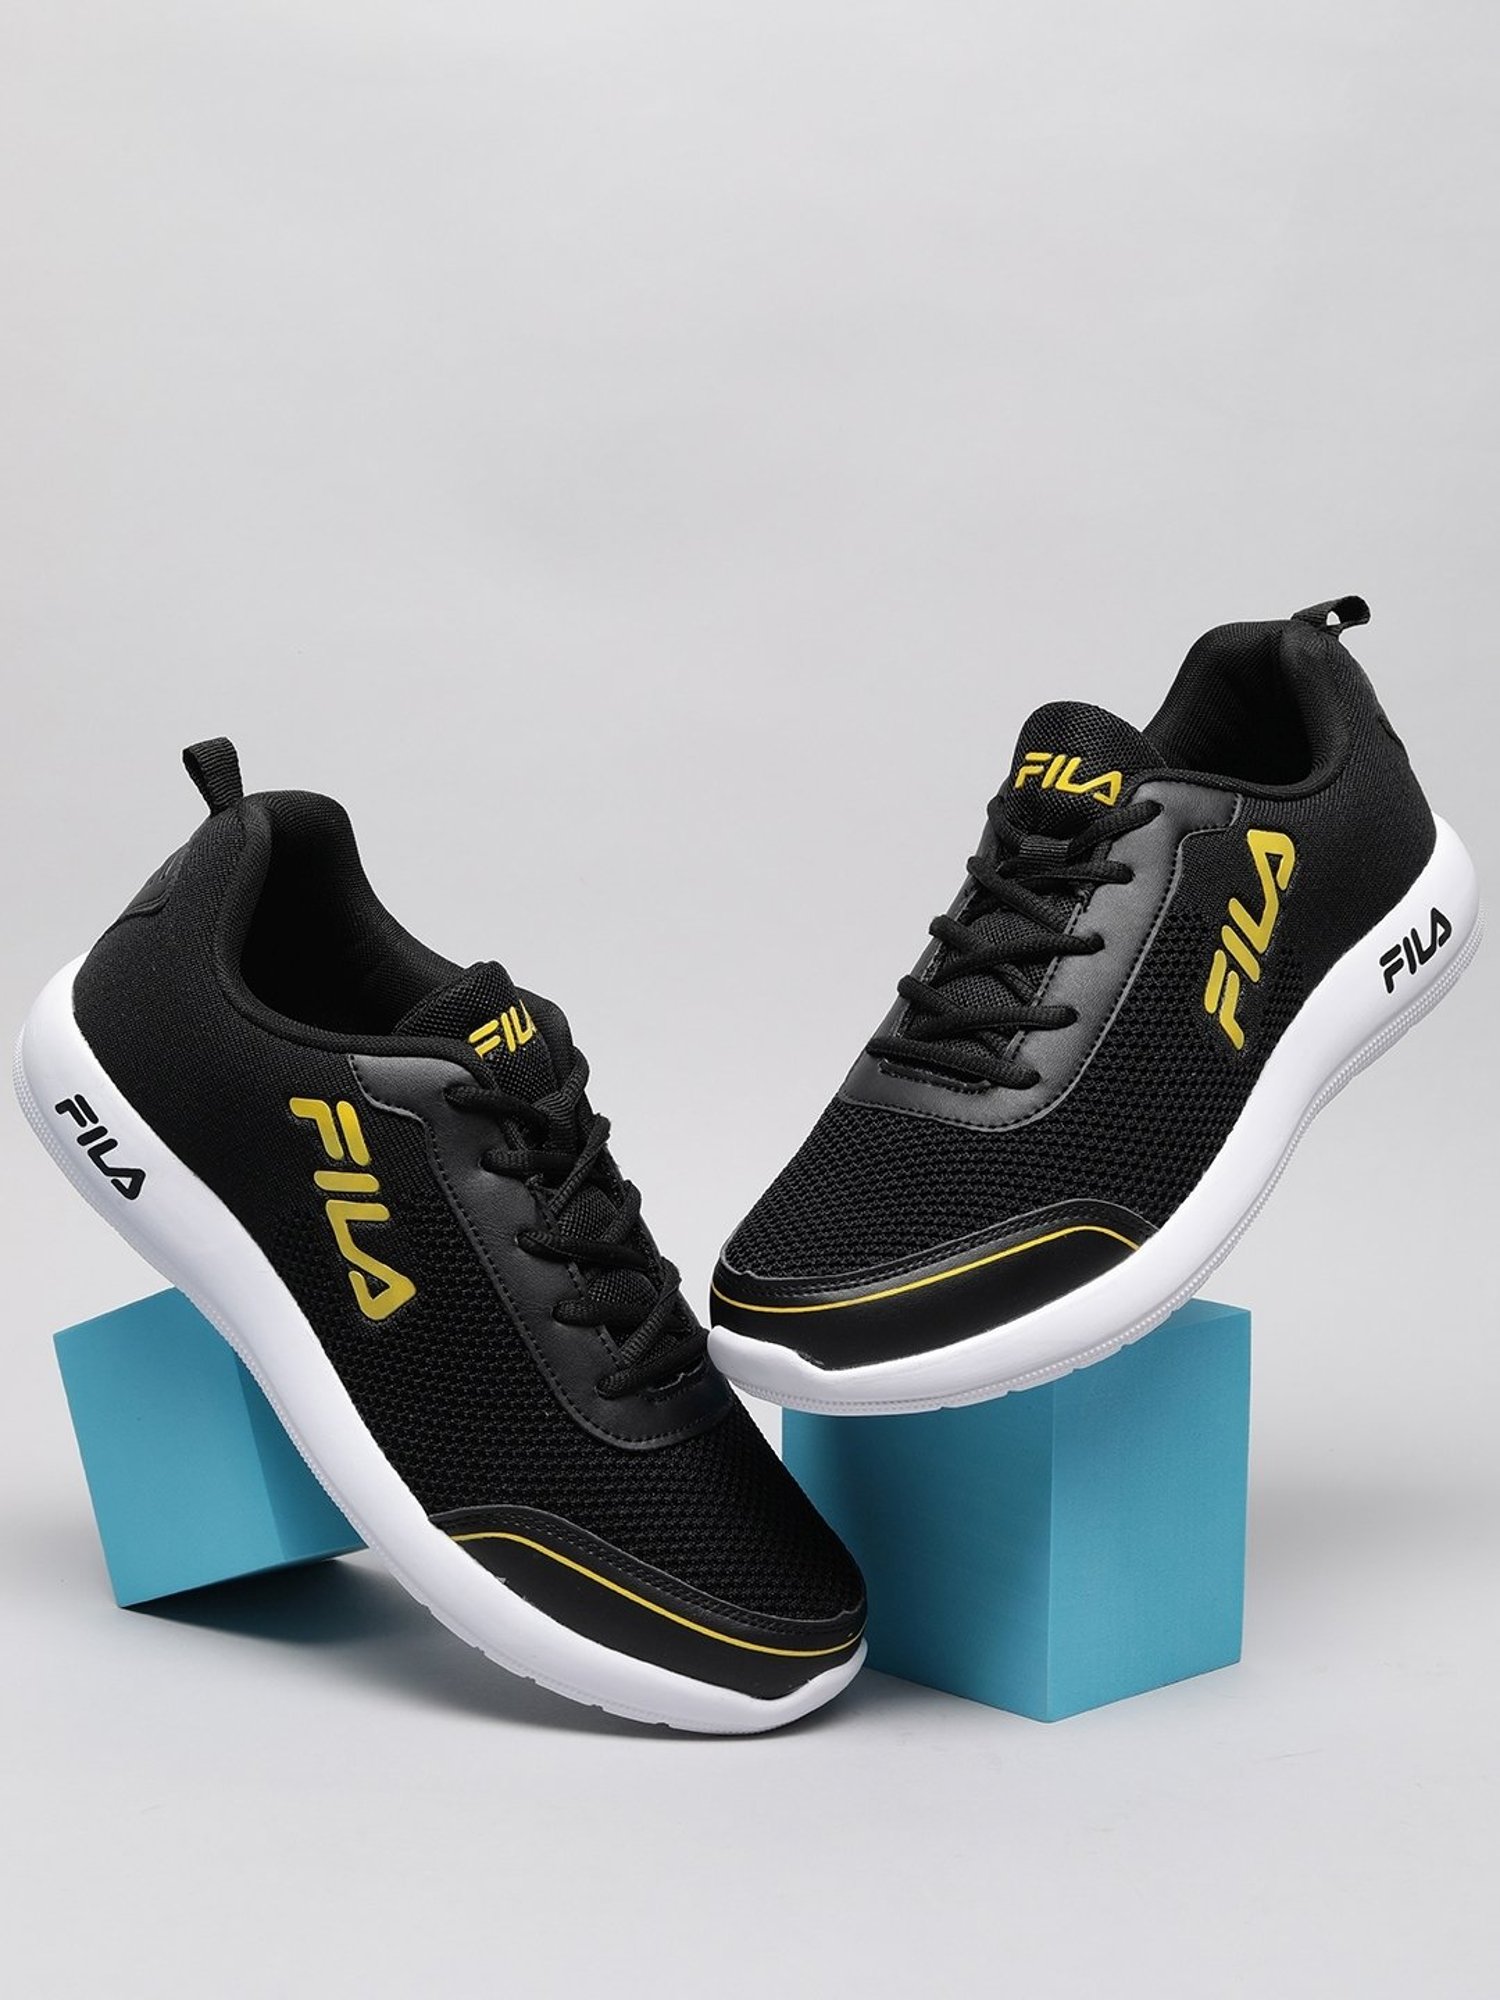 FILA Men's Disruptor 2 Suede Sneakers - Free Shipping